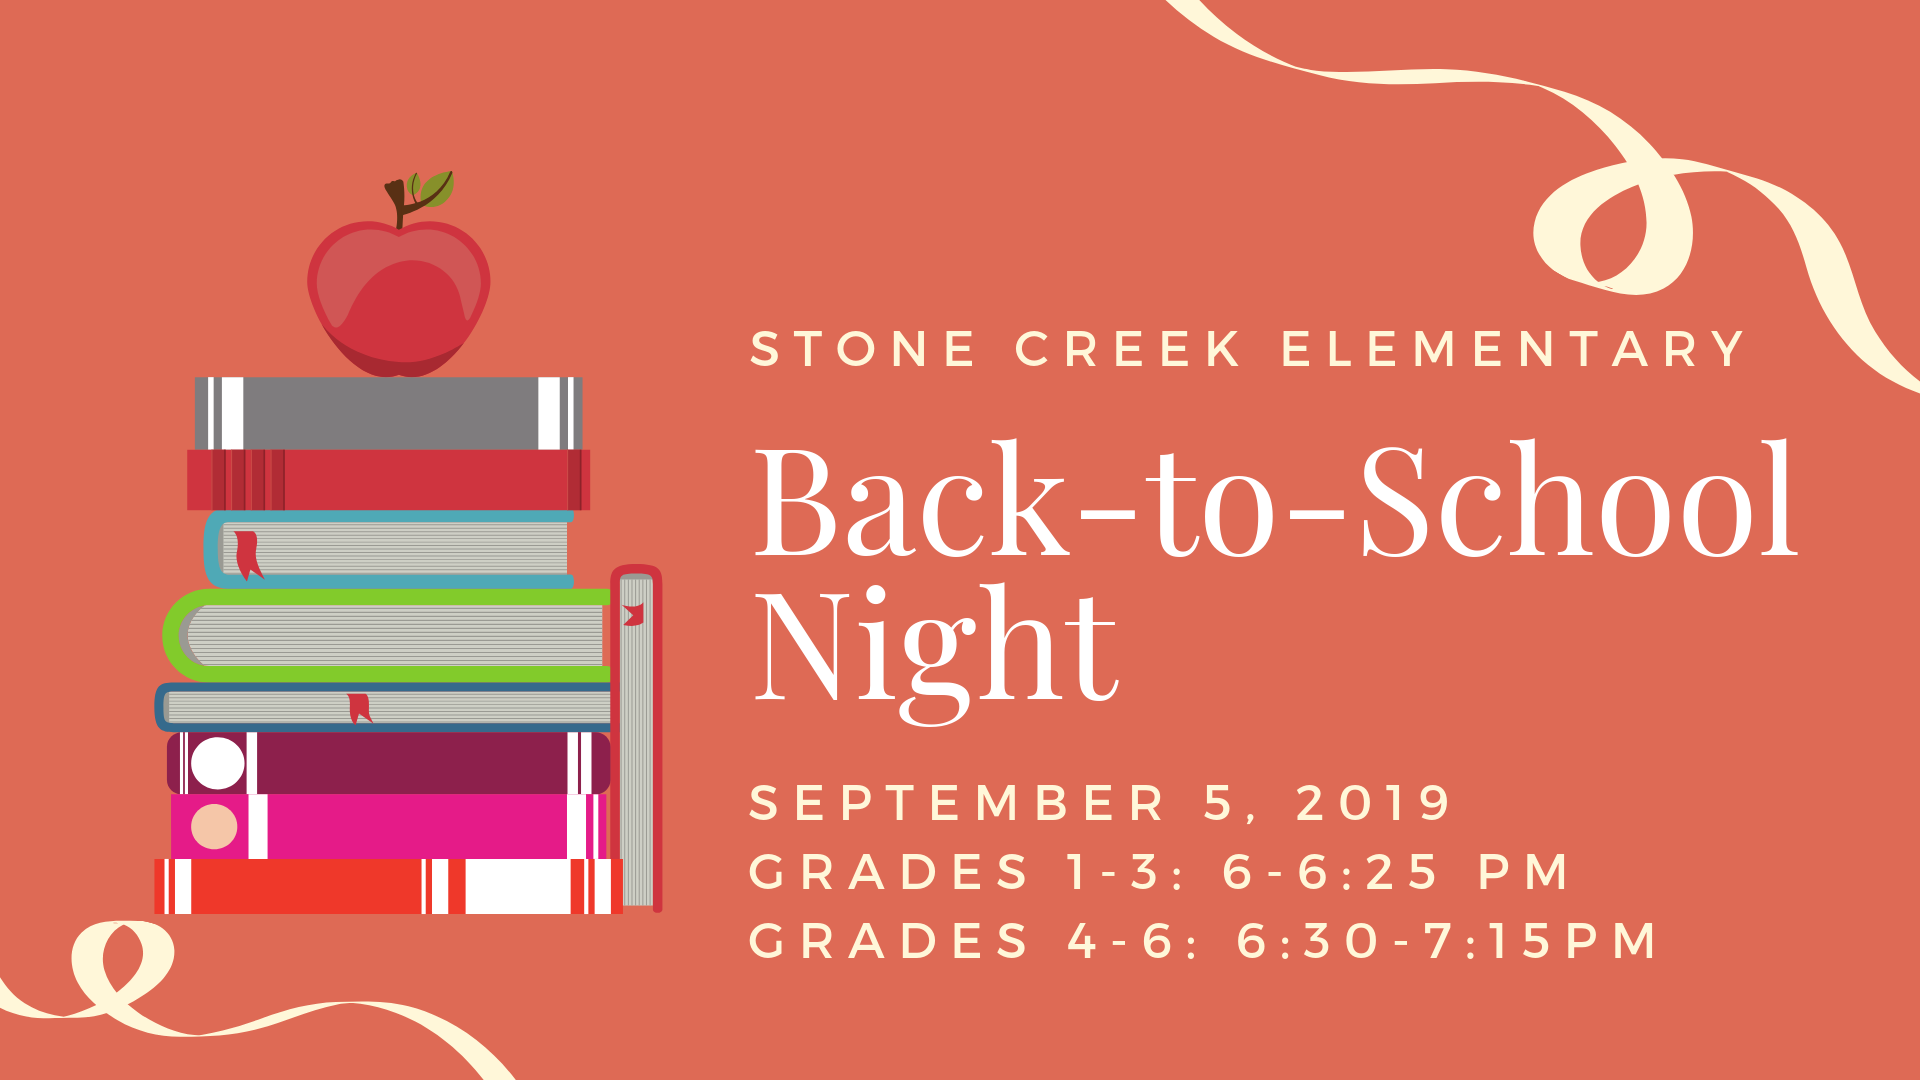 BacktoSchool Night Stone Creek Elementary